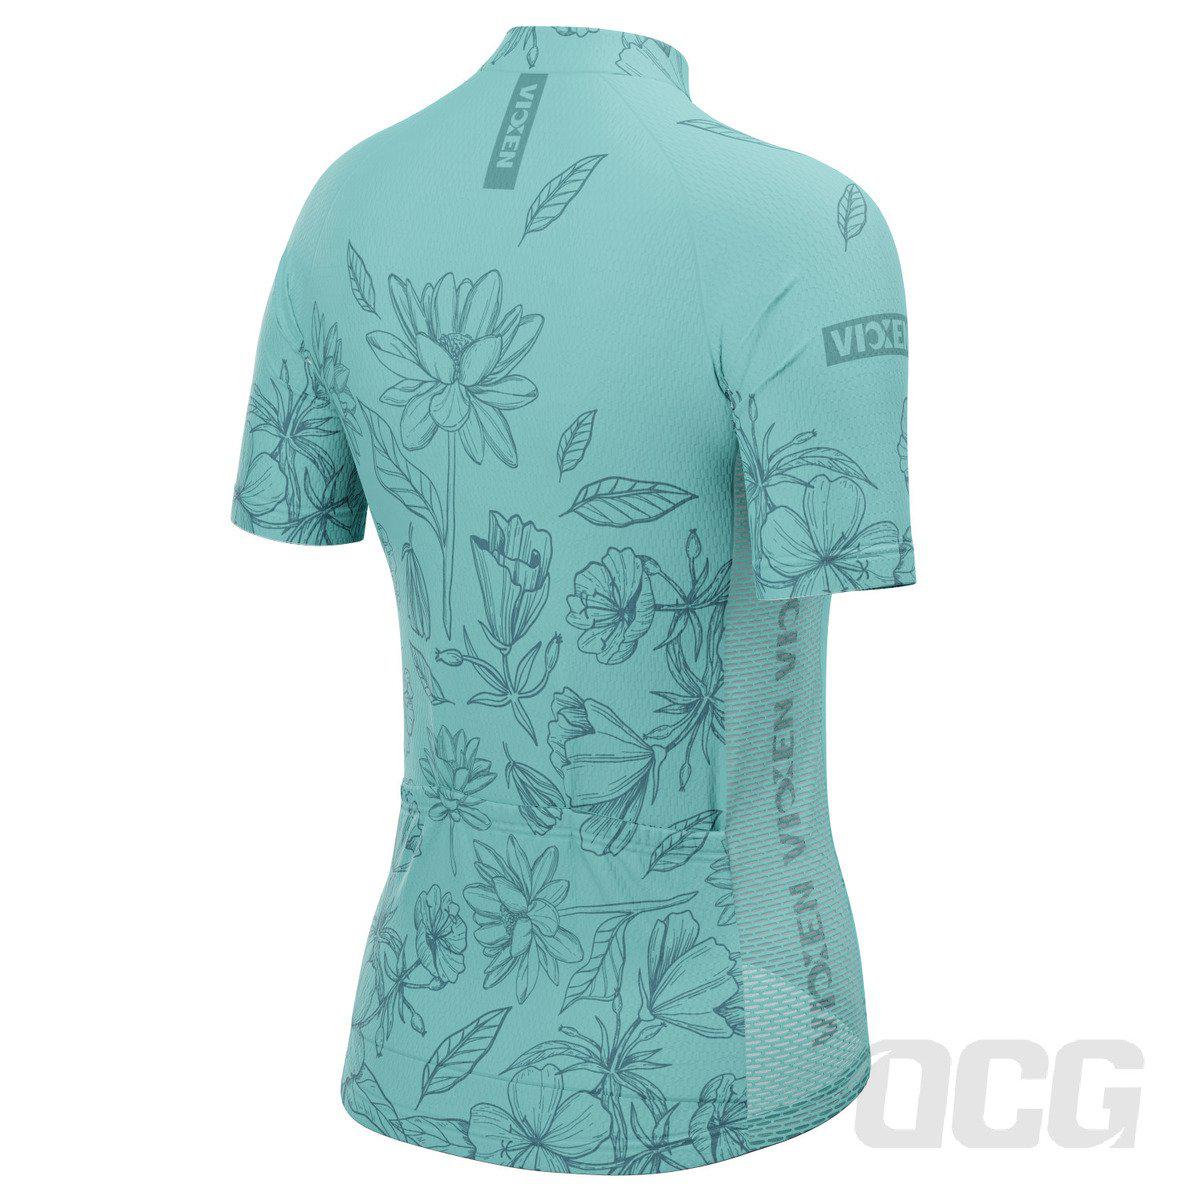 Women's Flower Power Short Sleeve Cycling Jersey